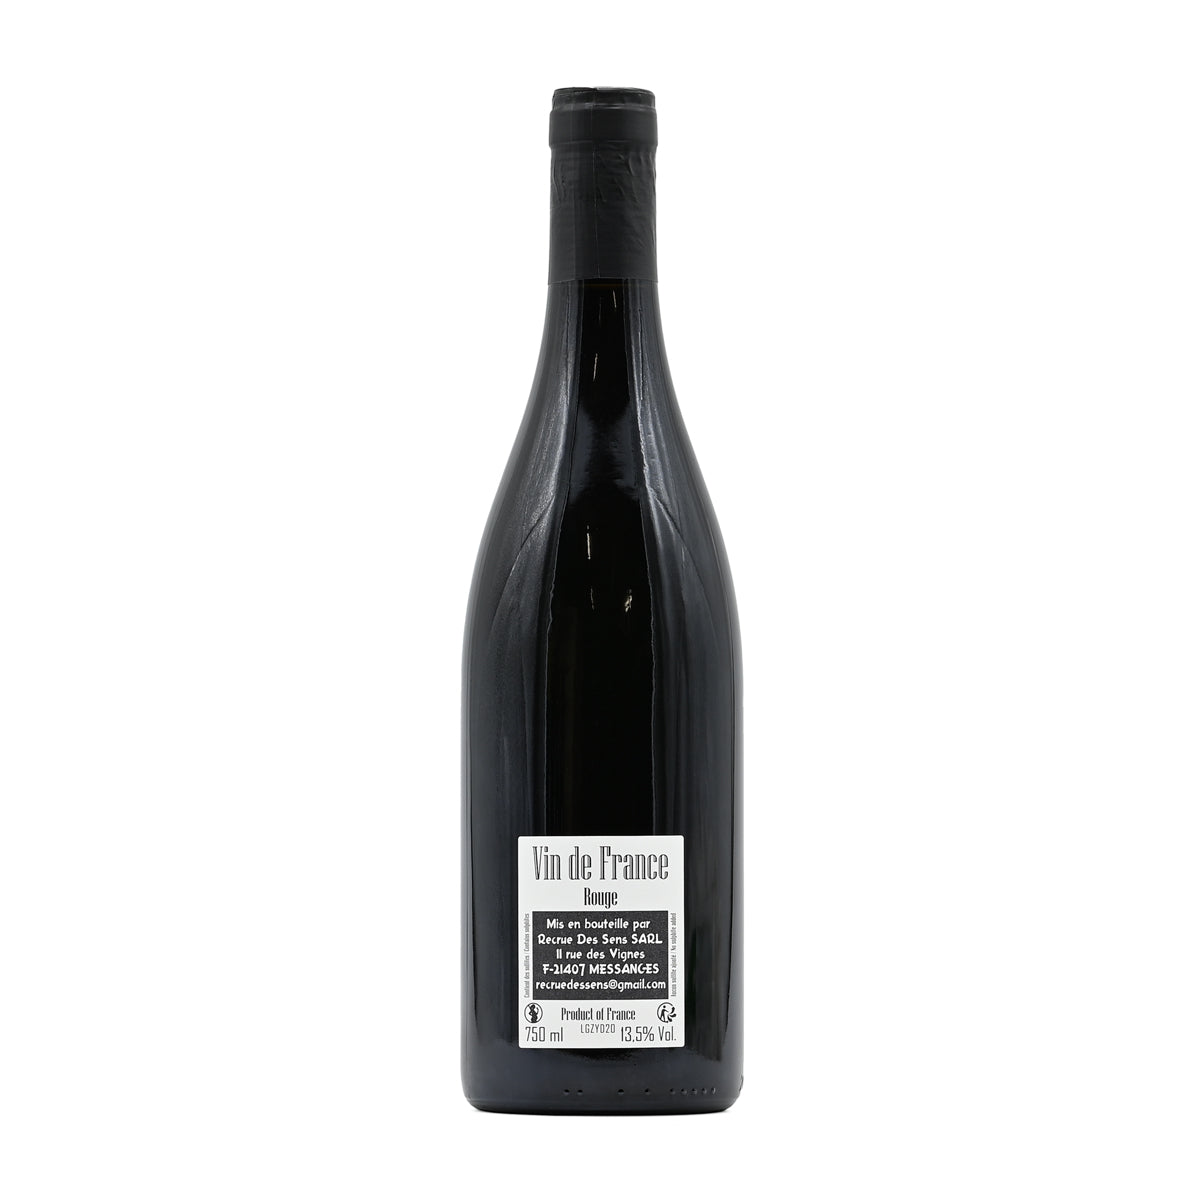 Yann Durieux VDF La Gouzotte 2020, 750ml French red wine, made from Pinot Noir; Vin de France, from Recrue Des Sens, Burgundy, France – GDV Fine Wines, Hong Kong